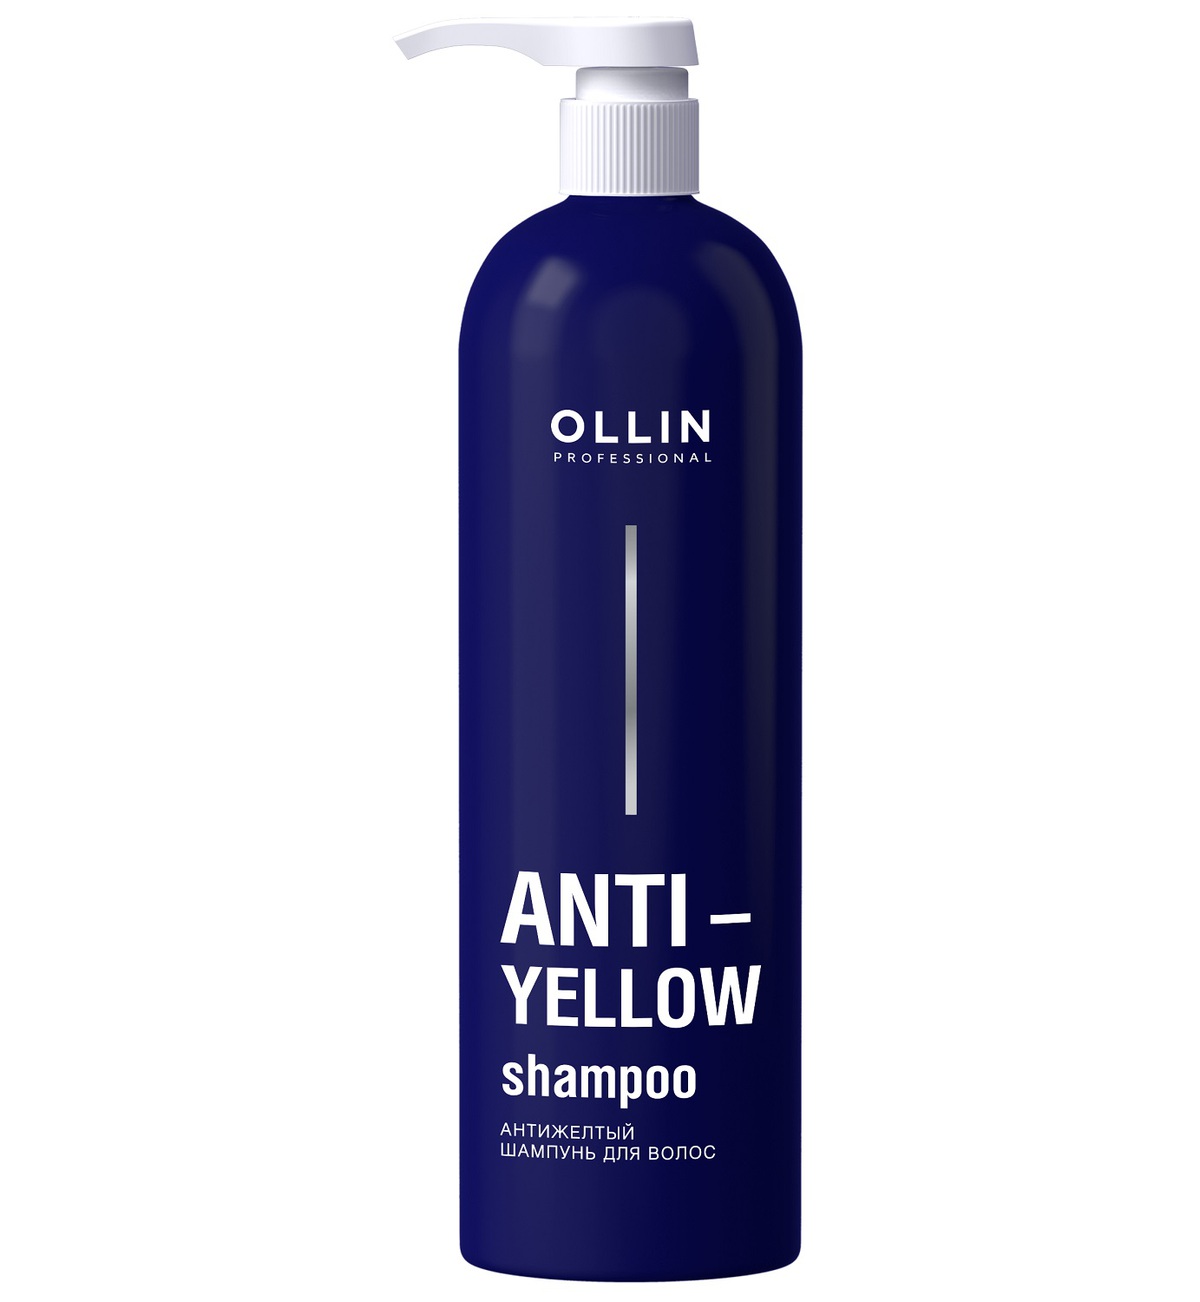 Ollin Professional Антижелтый шампунь для волос Anti-Yellow Shampoo, 500 мл (Ollin Professional, Anti-Yellow) антижелтый шампунь для волос ollin professional anti yellow 500 мл